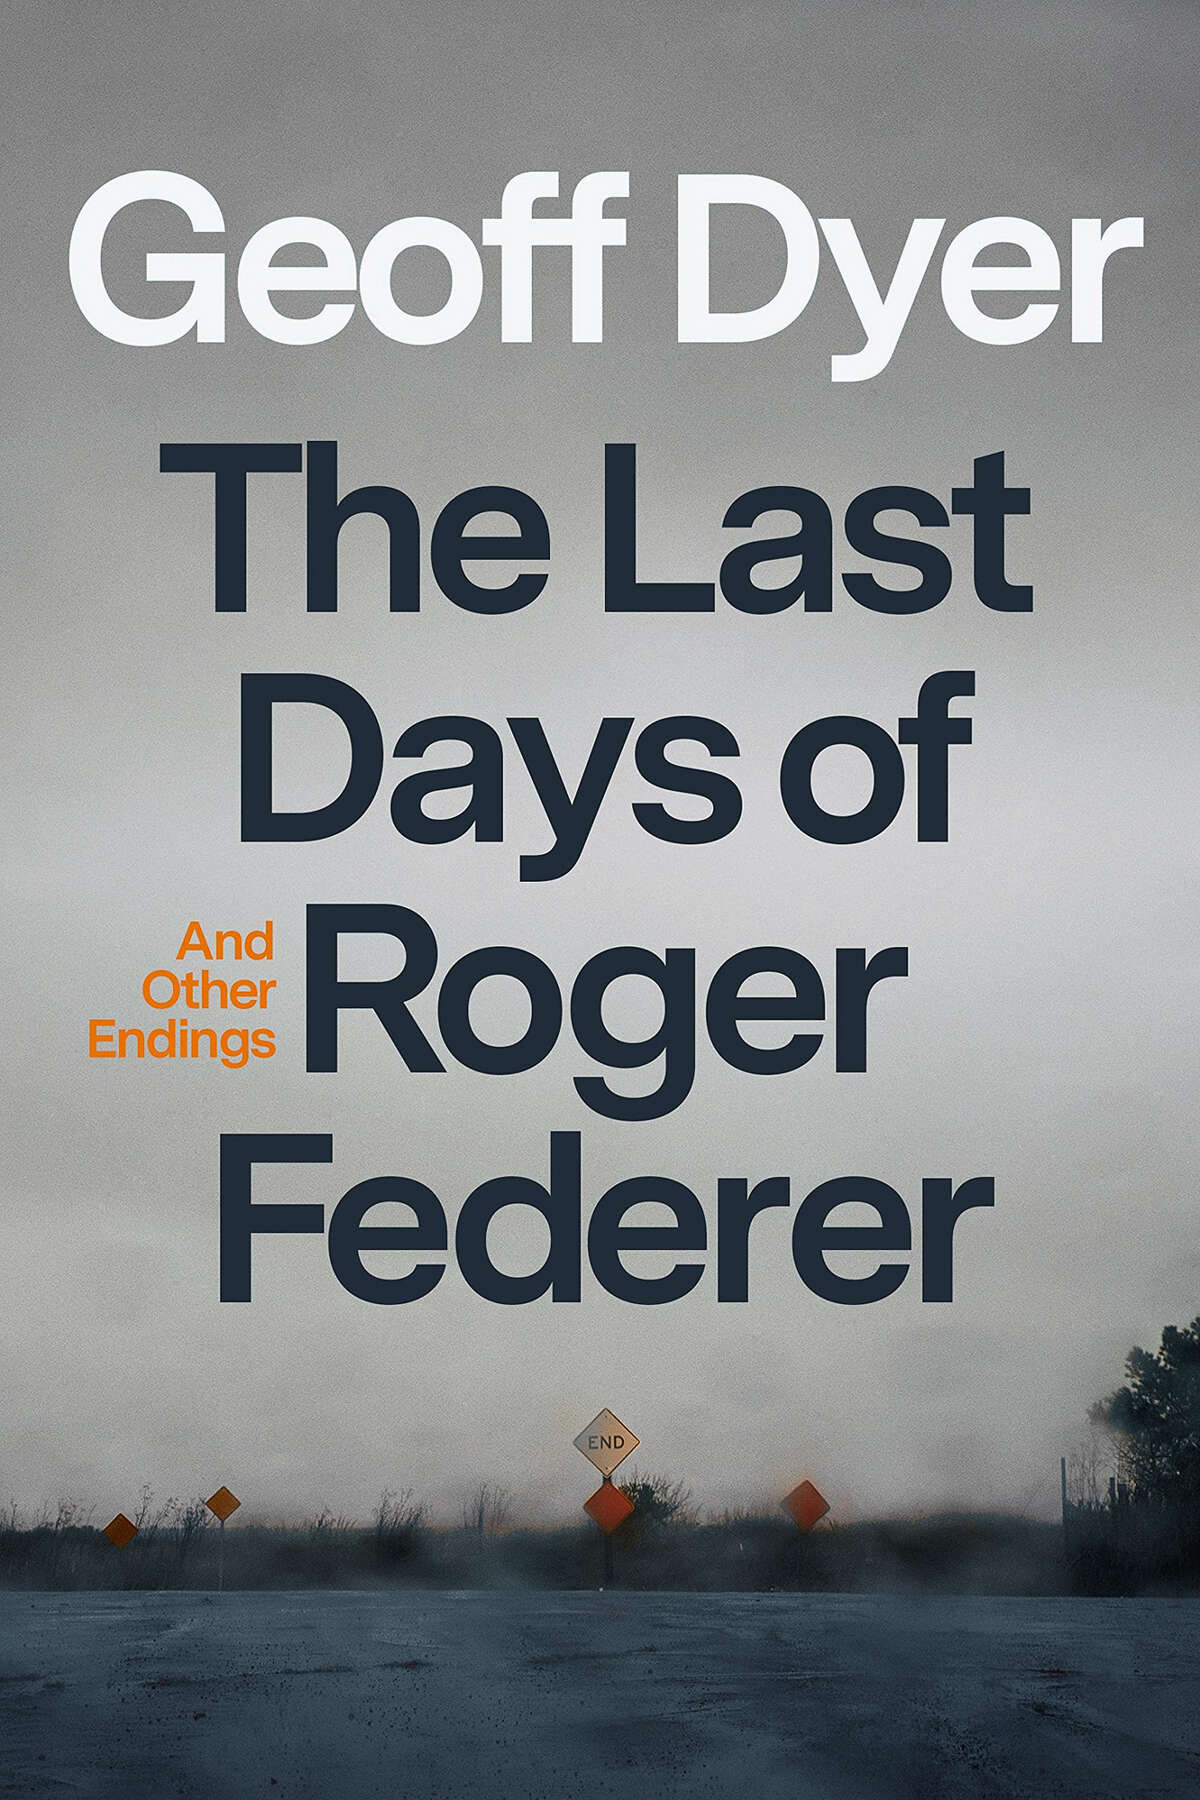 "The Last Days of Roger Federer"